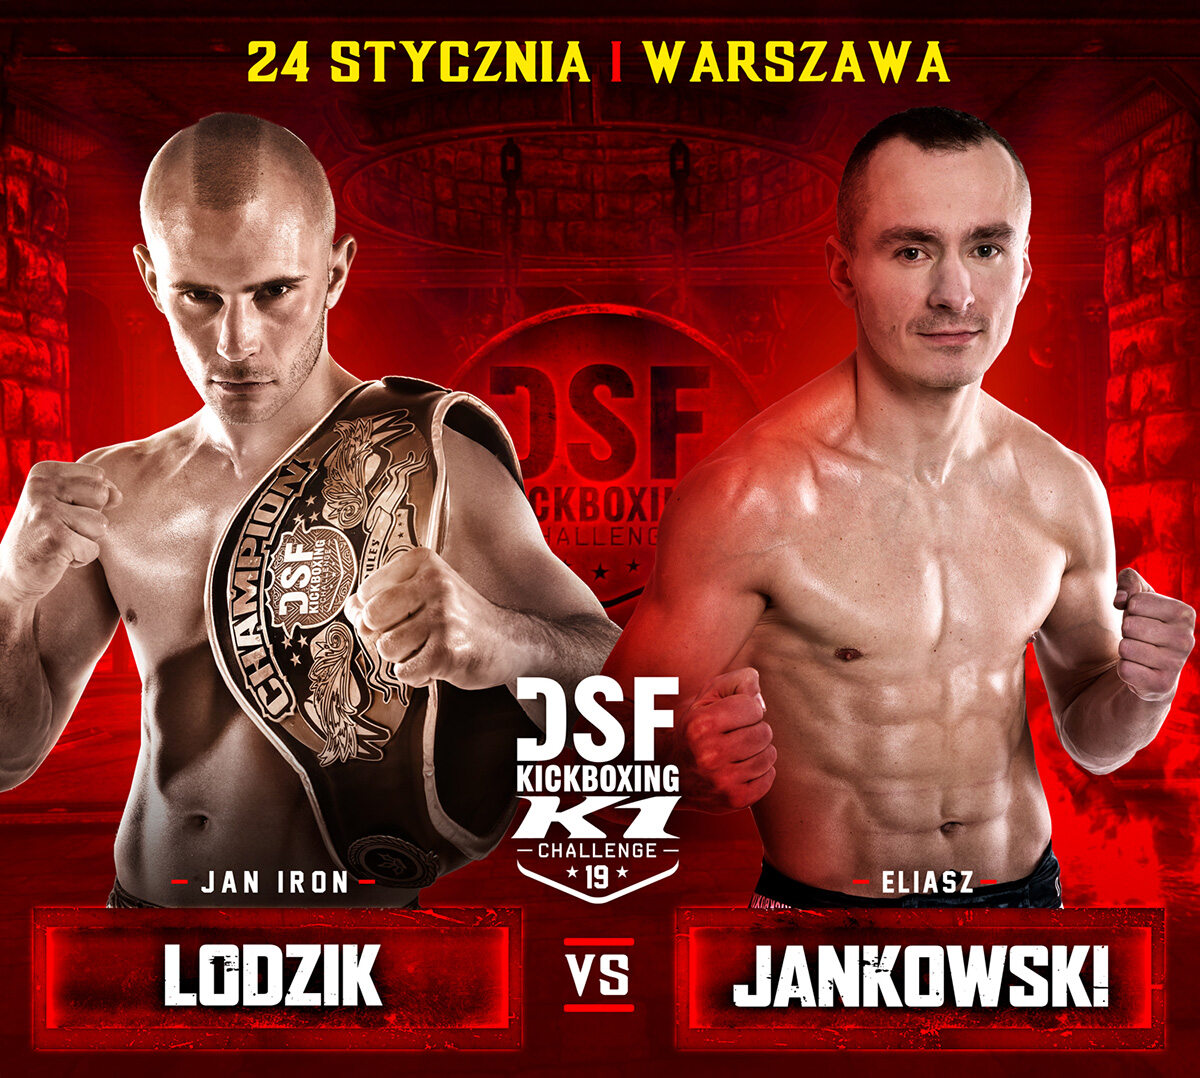 DSF Kickboxing Challange Lodzik vs Eliasz Jankowski